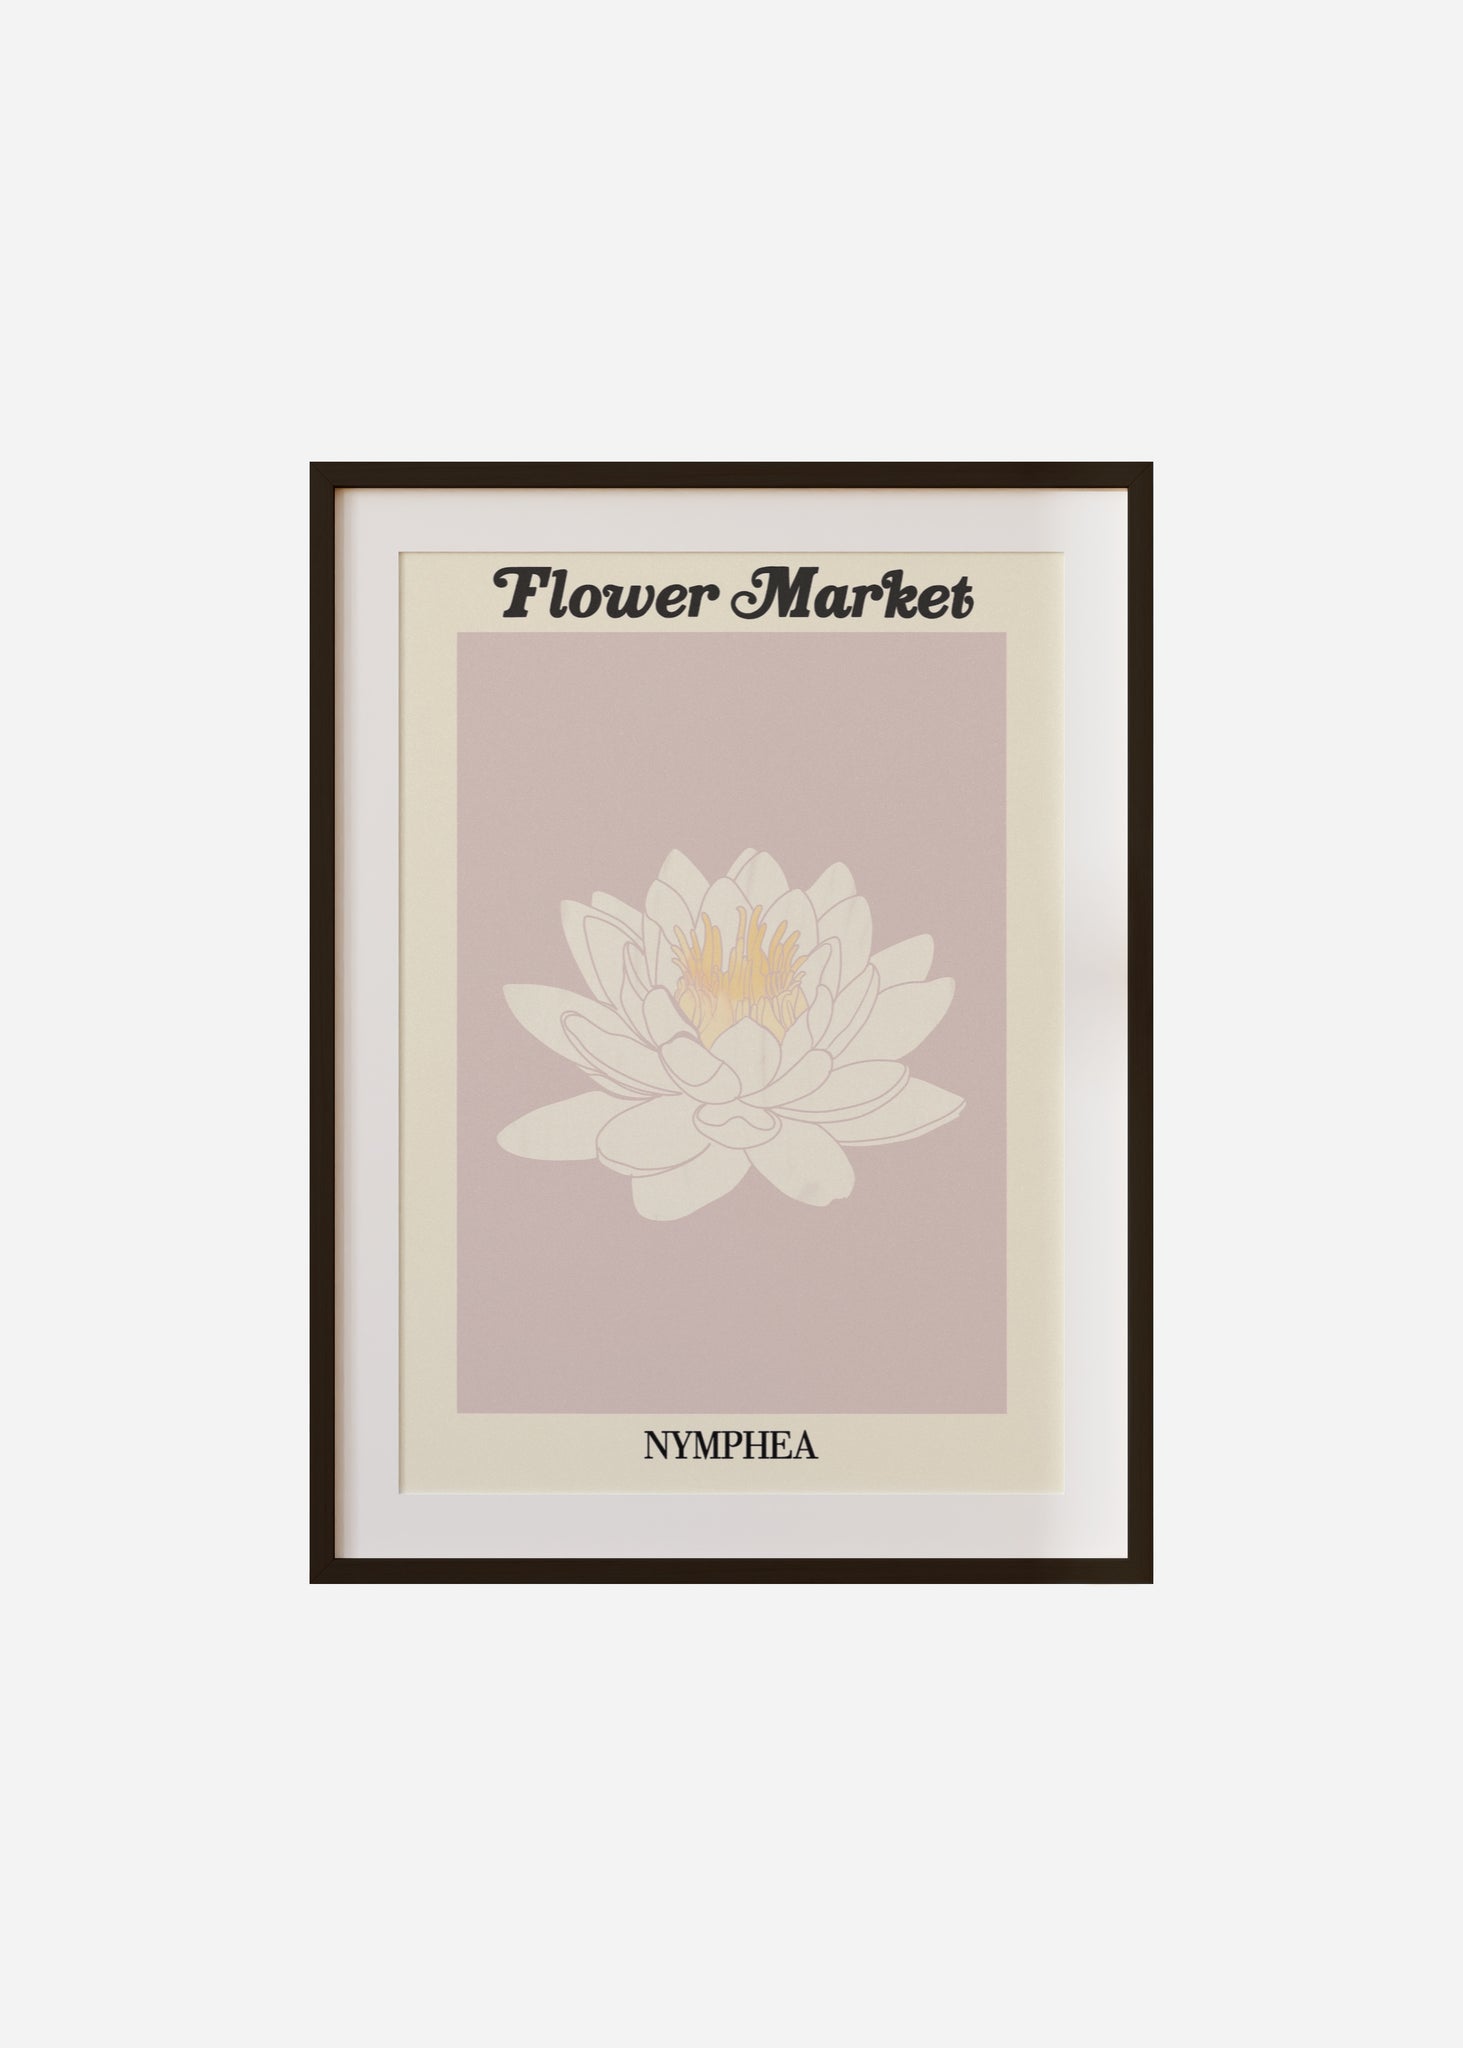 flower market / nymphea Framed & Mounted Print